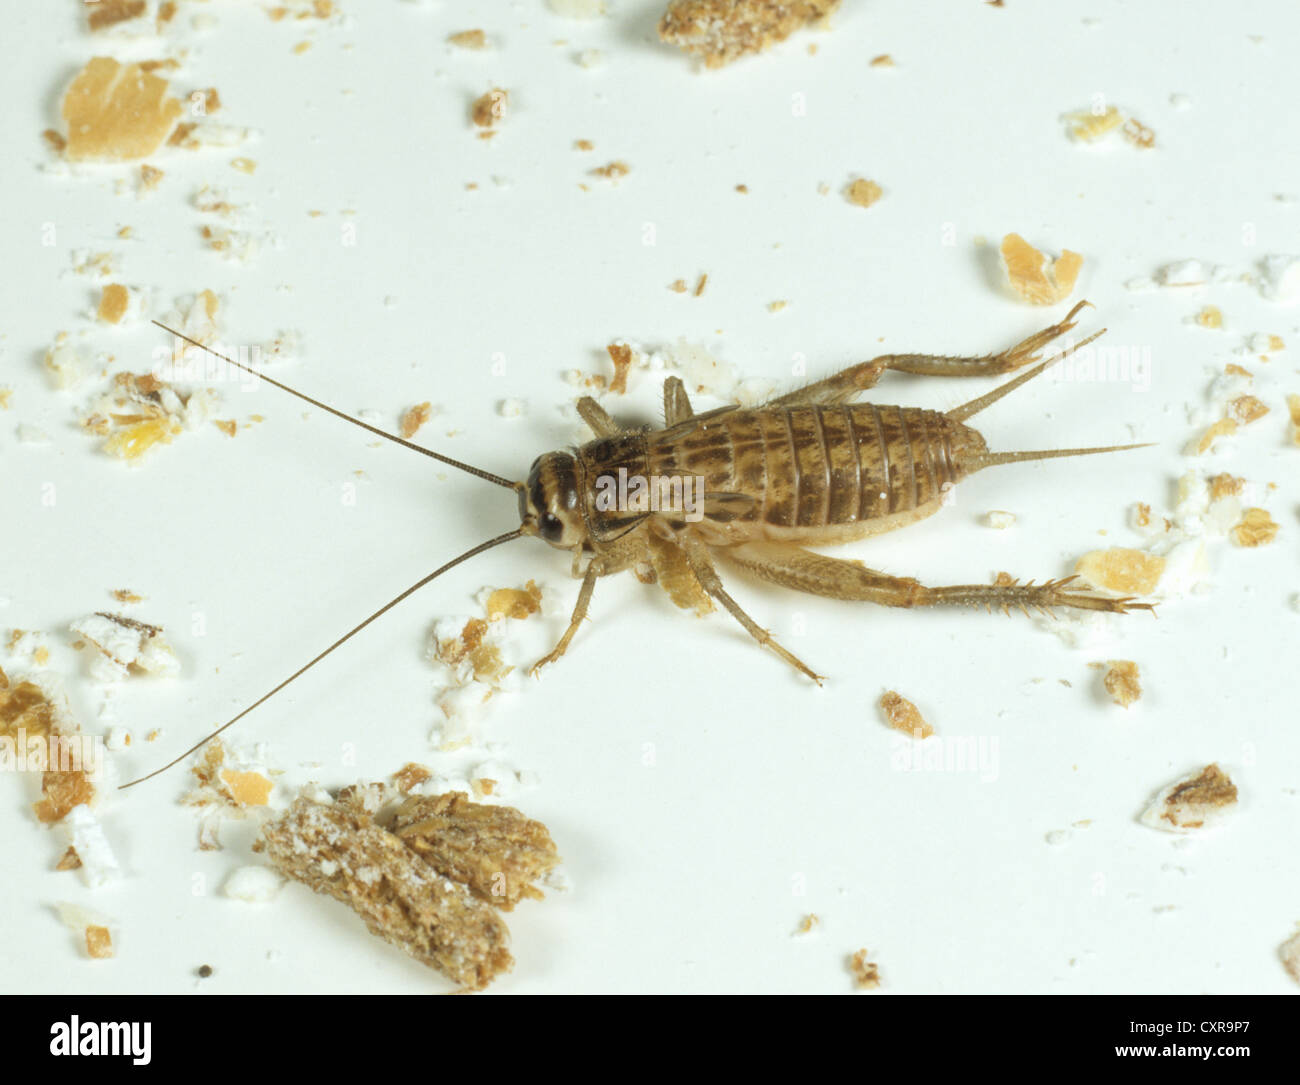 House cricket , Acheta domestica, nymph among kitchen detritis Stock Photo